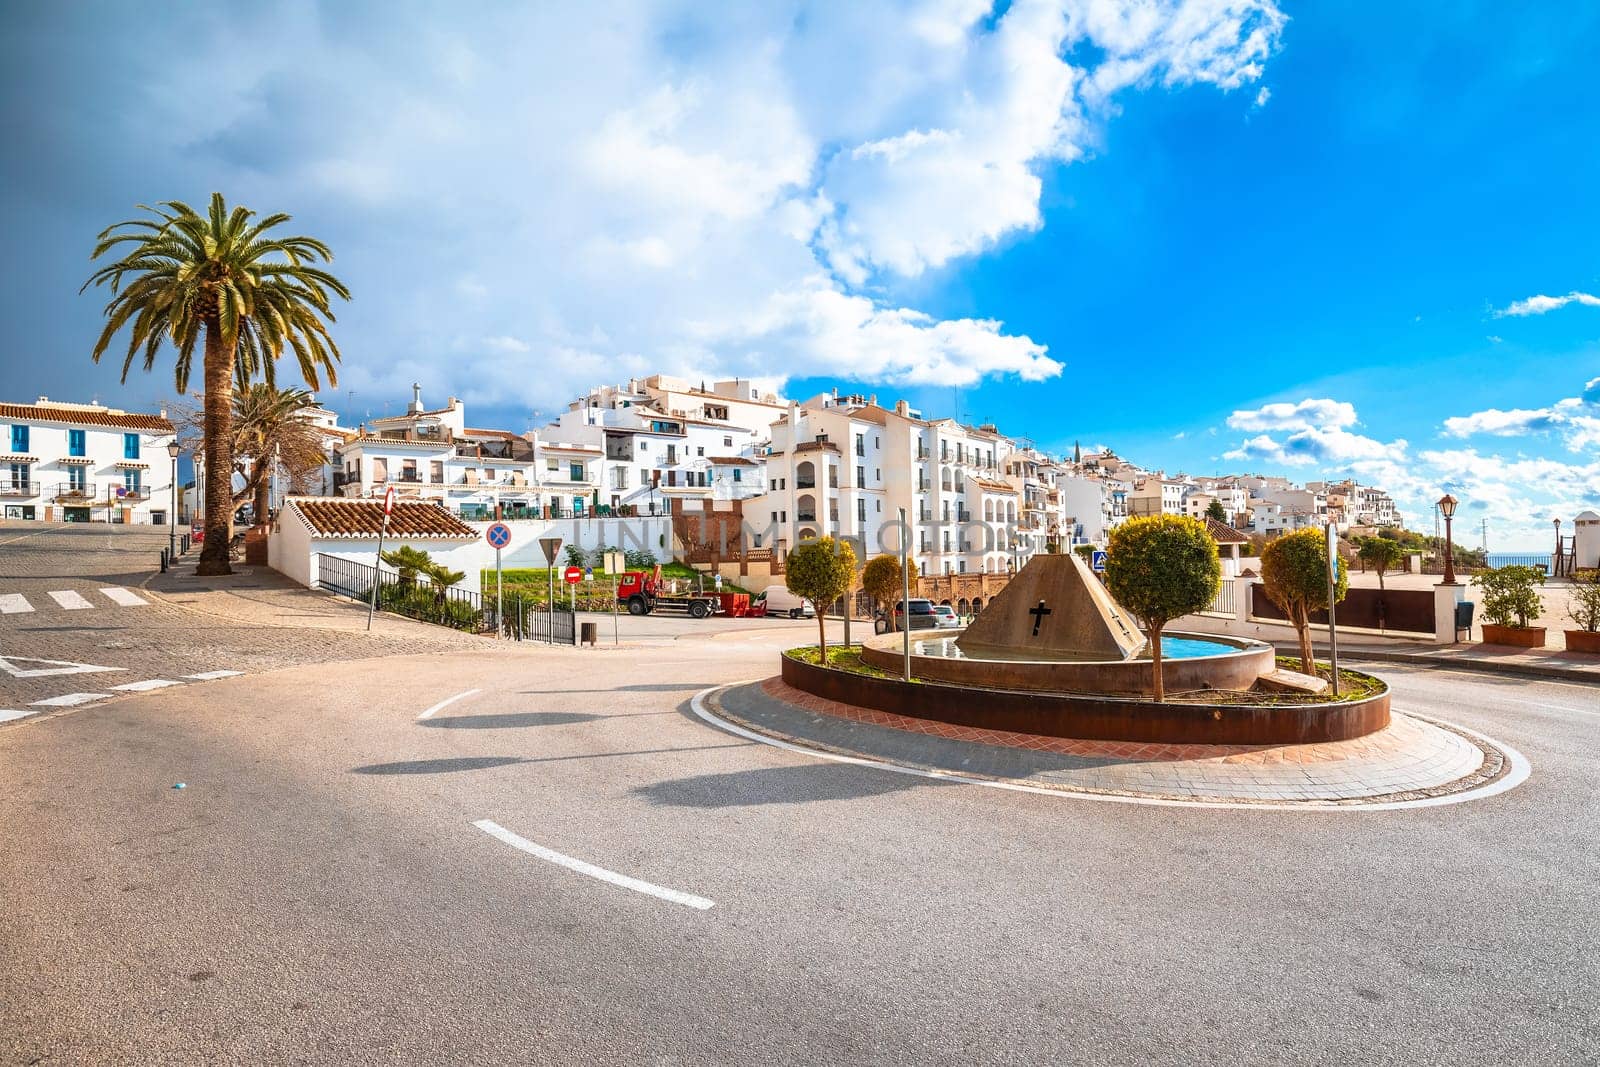 White village of Frigiliana square view, Andalusia region of Spain